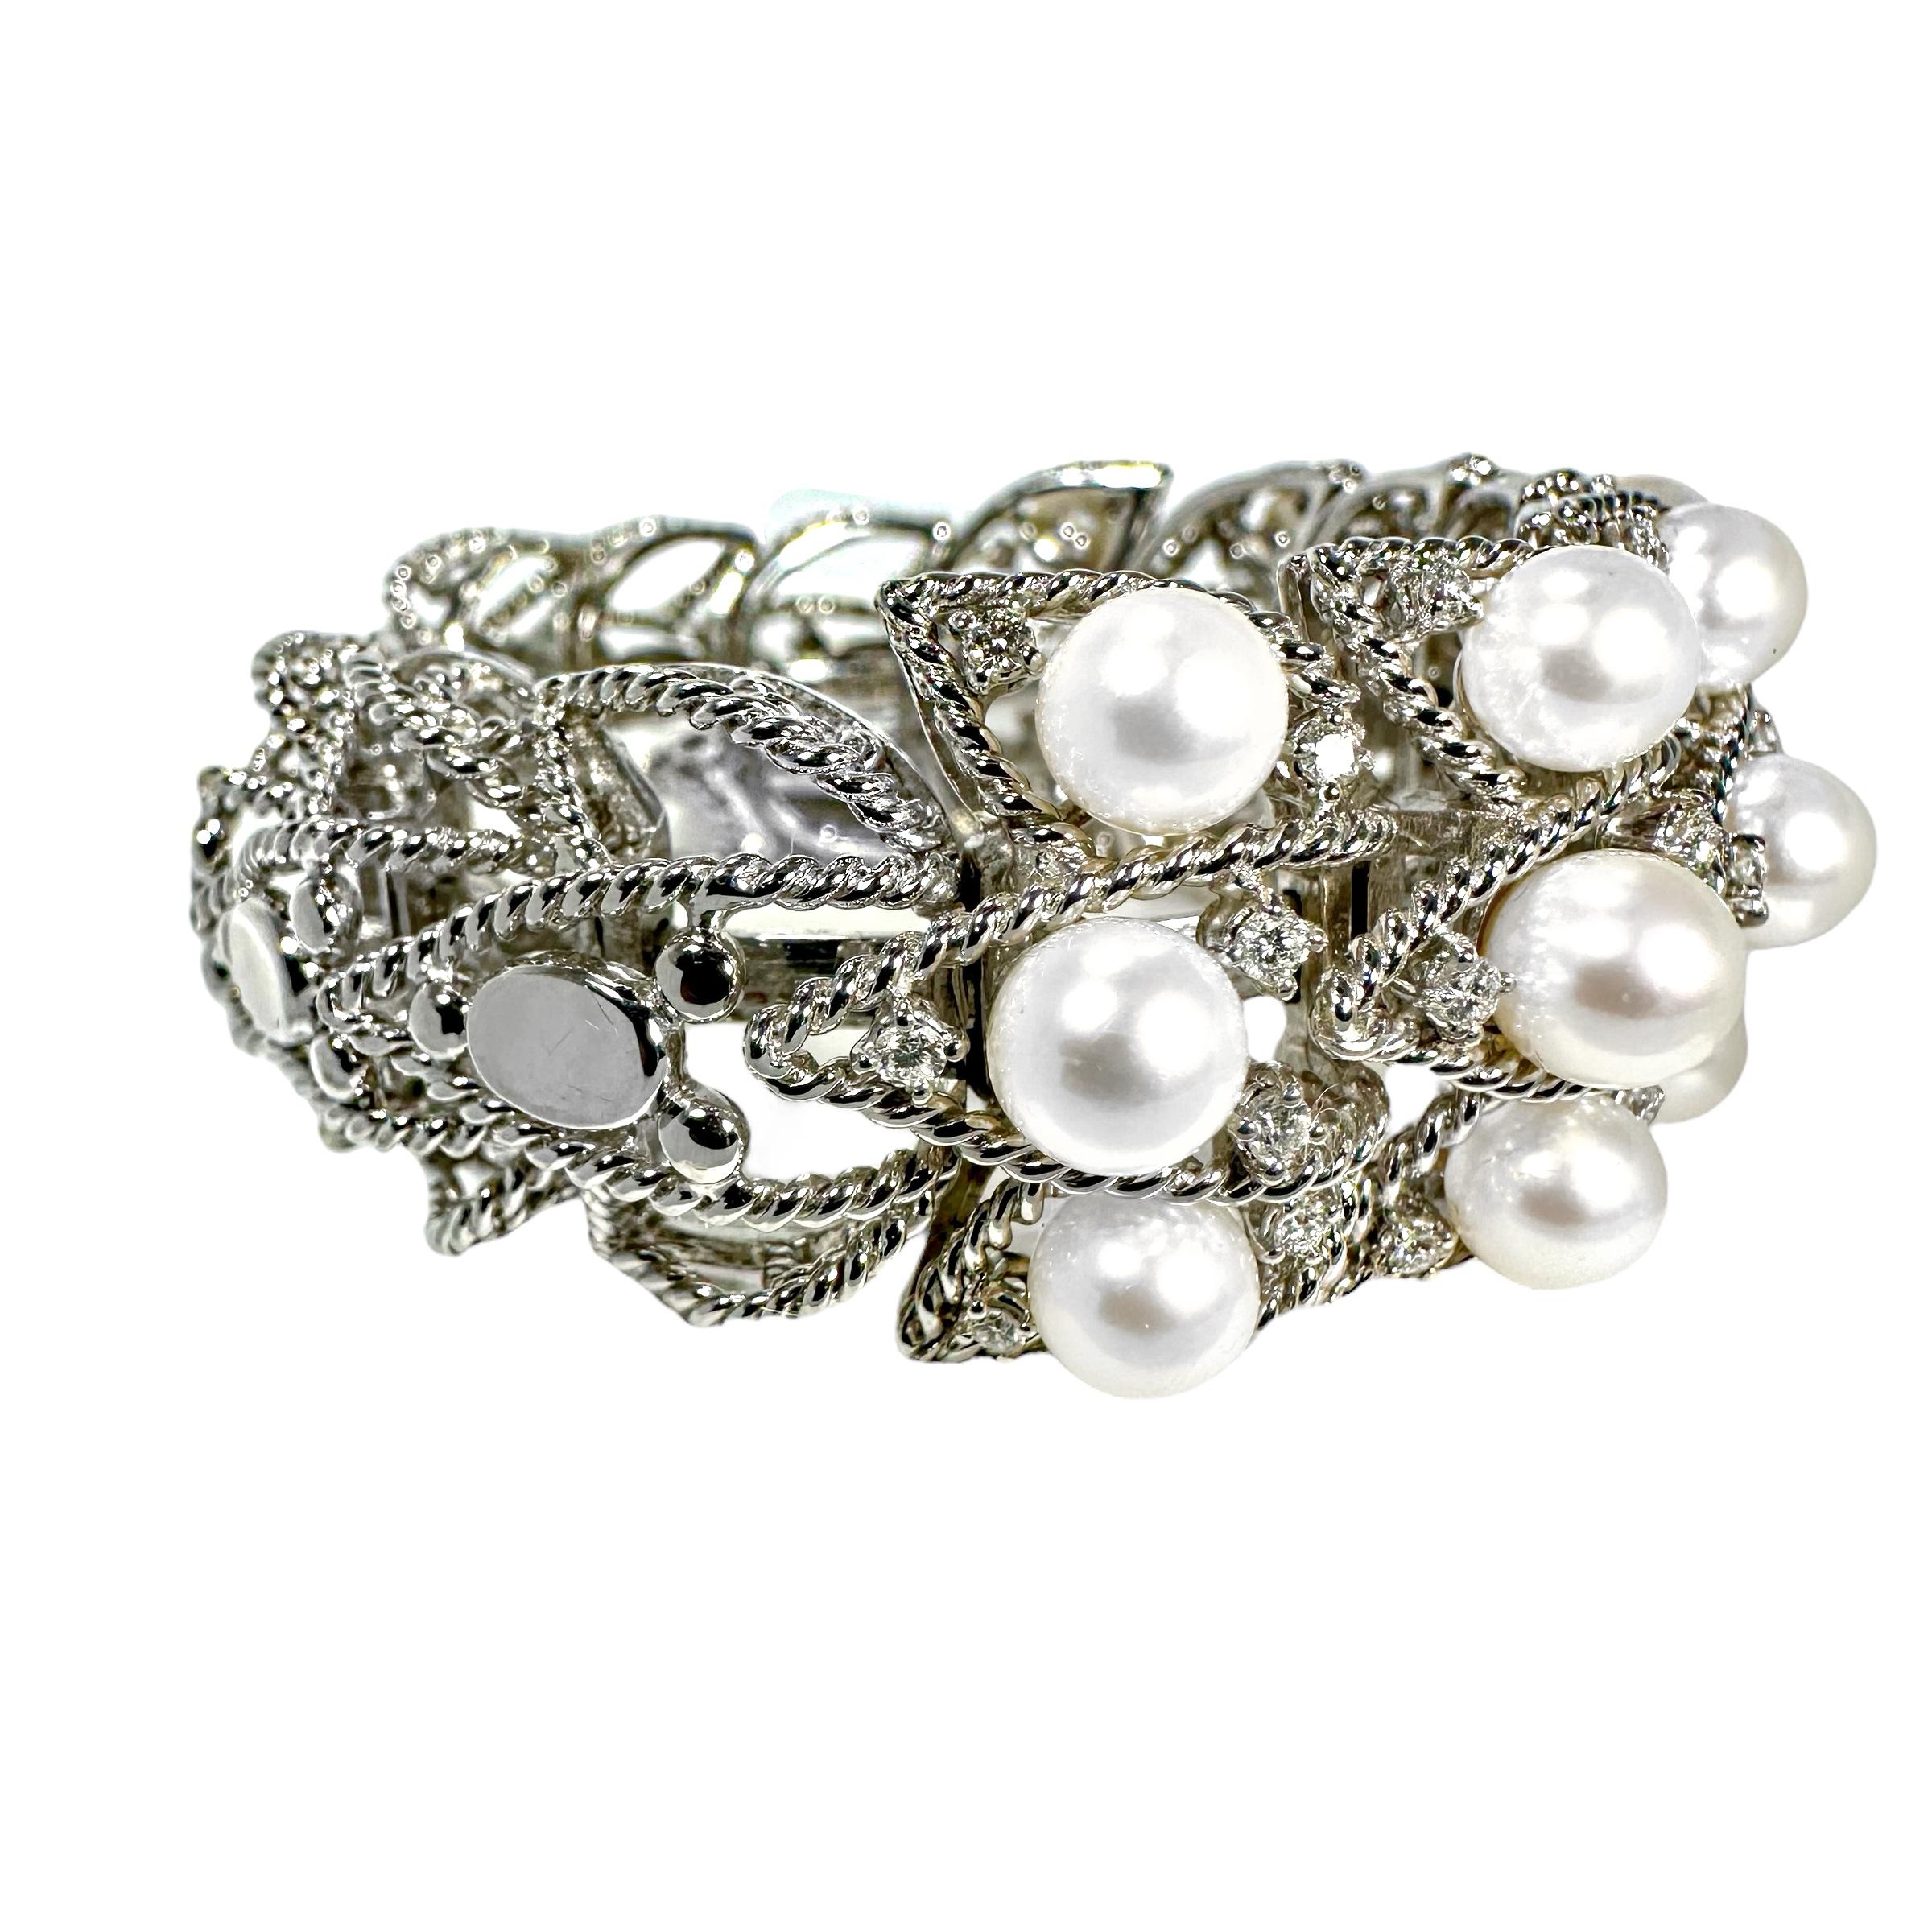 Brilliant Cut Elegant Seaman Schepps White Gold Pearl and Diamond Flexible Cuff Bracelet For Sale